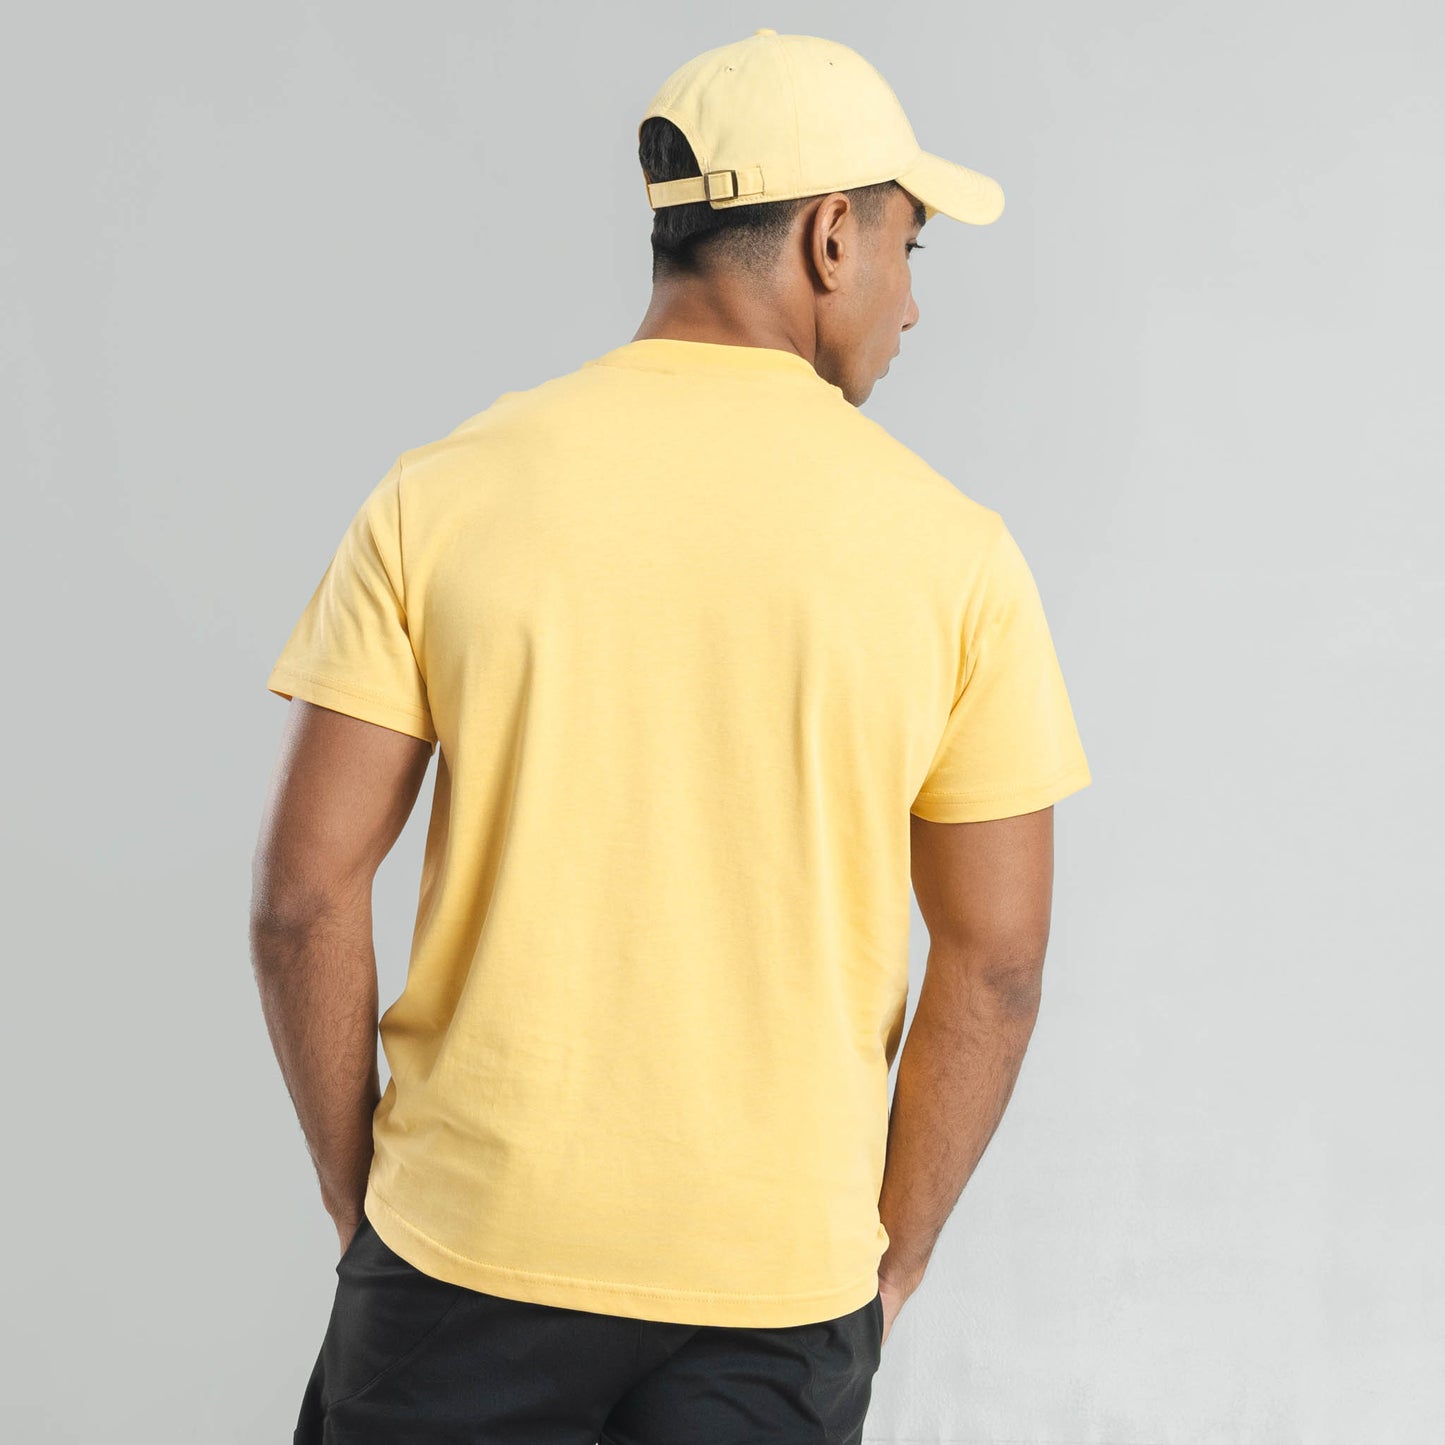 Plain Mustard Yellow crew neck essential t-shirt